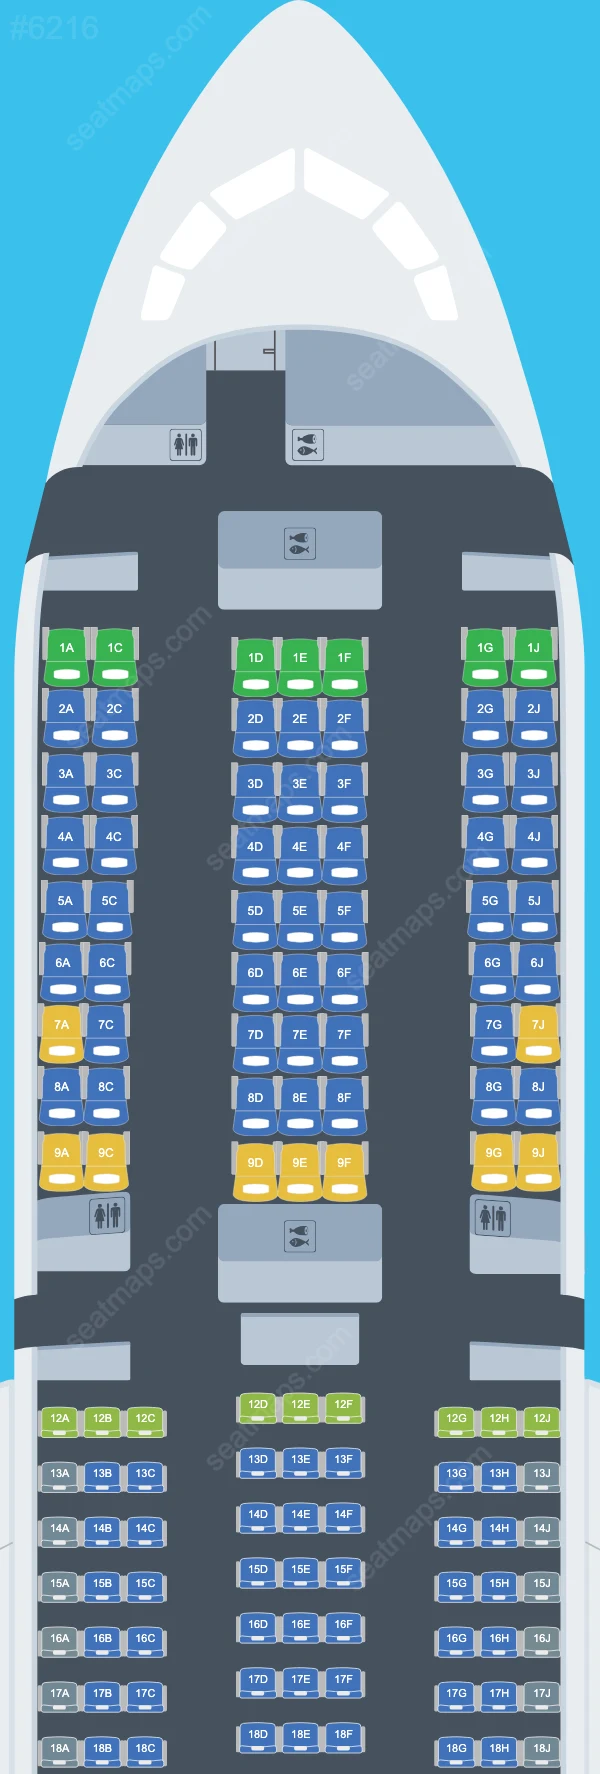 TUI Airways Boeing 787 Seat Maps 787-9